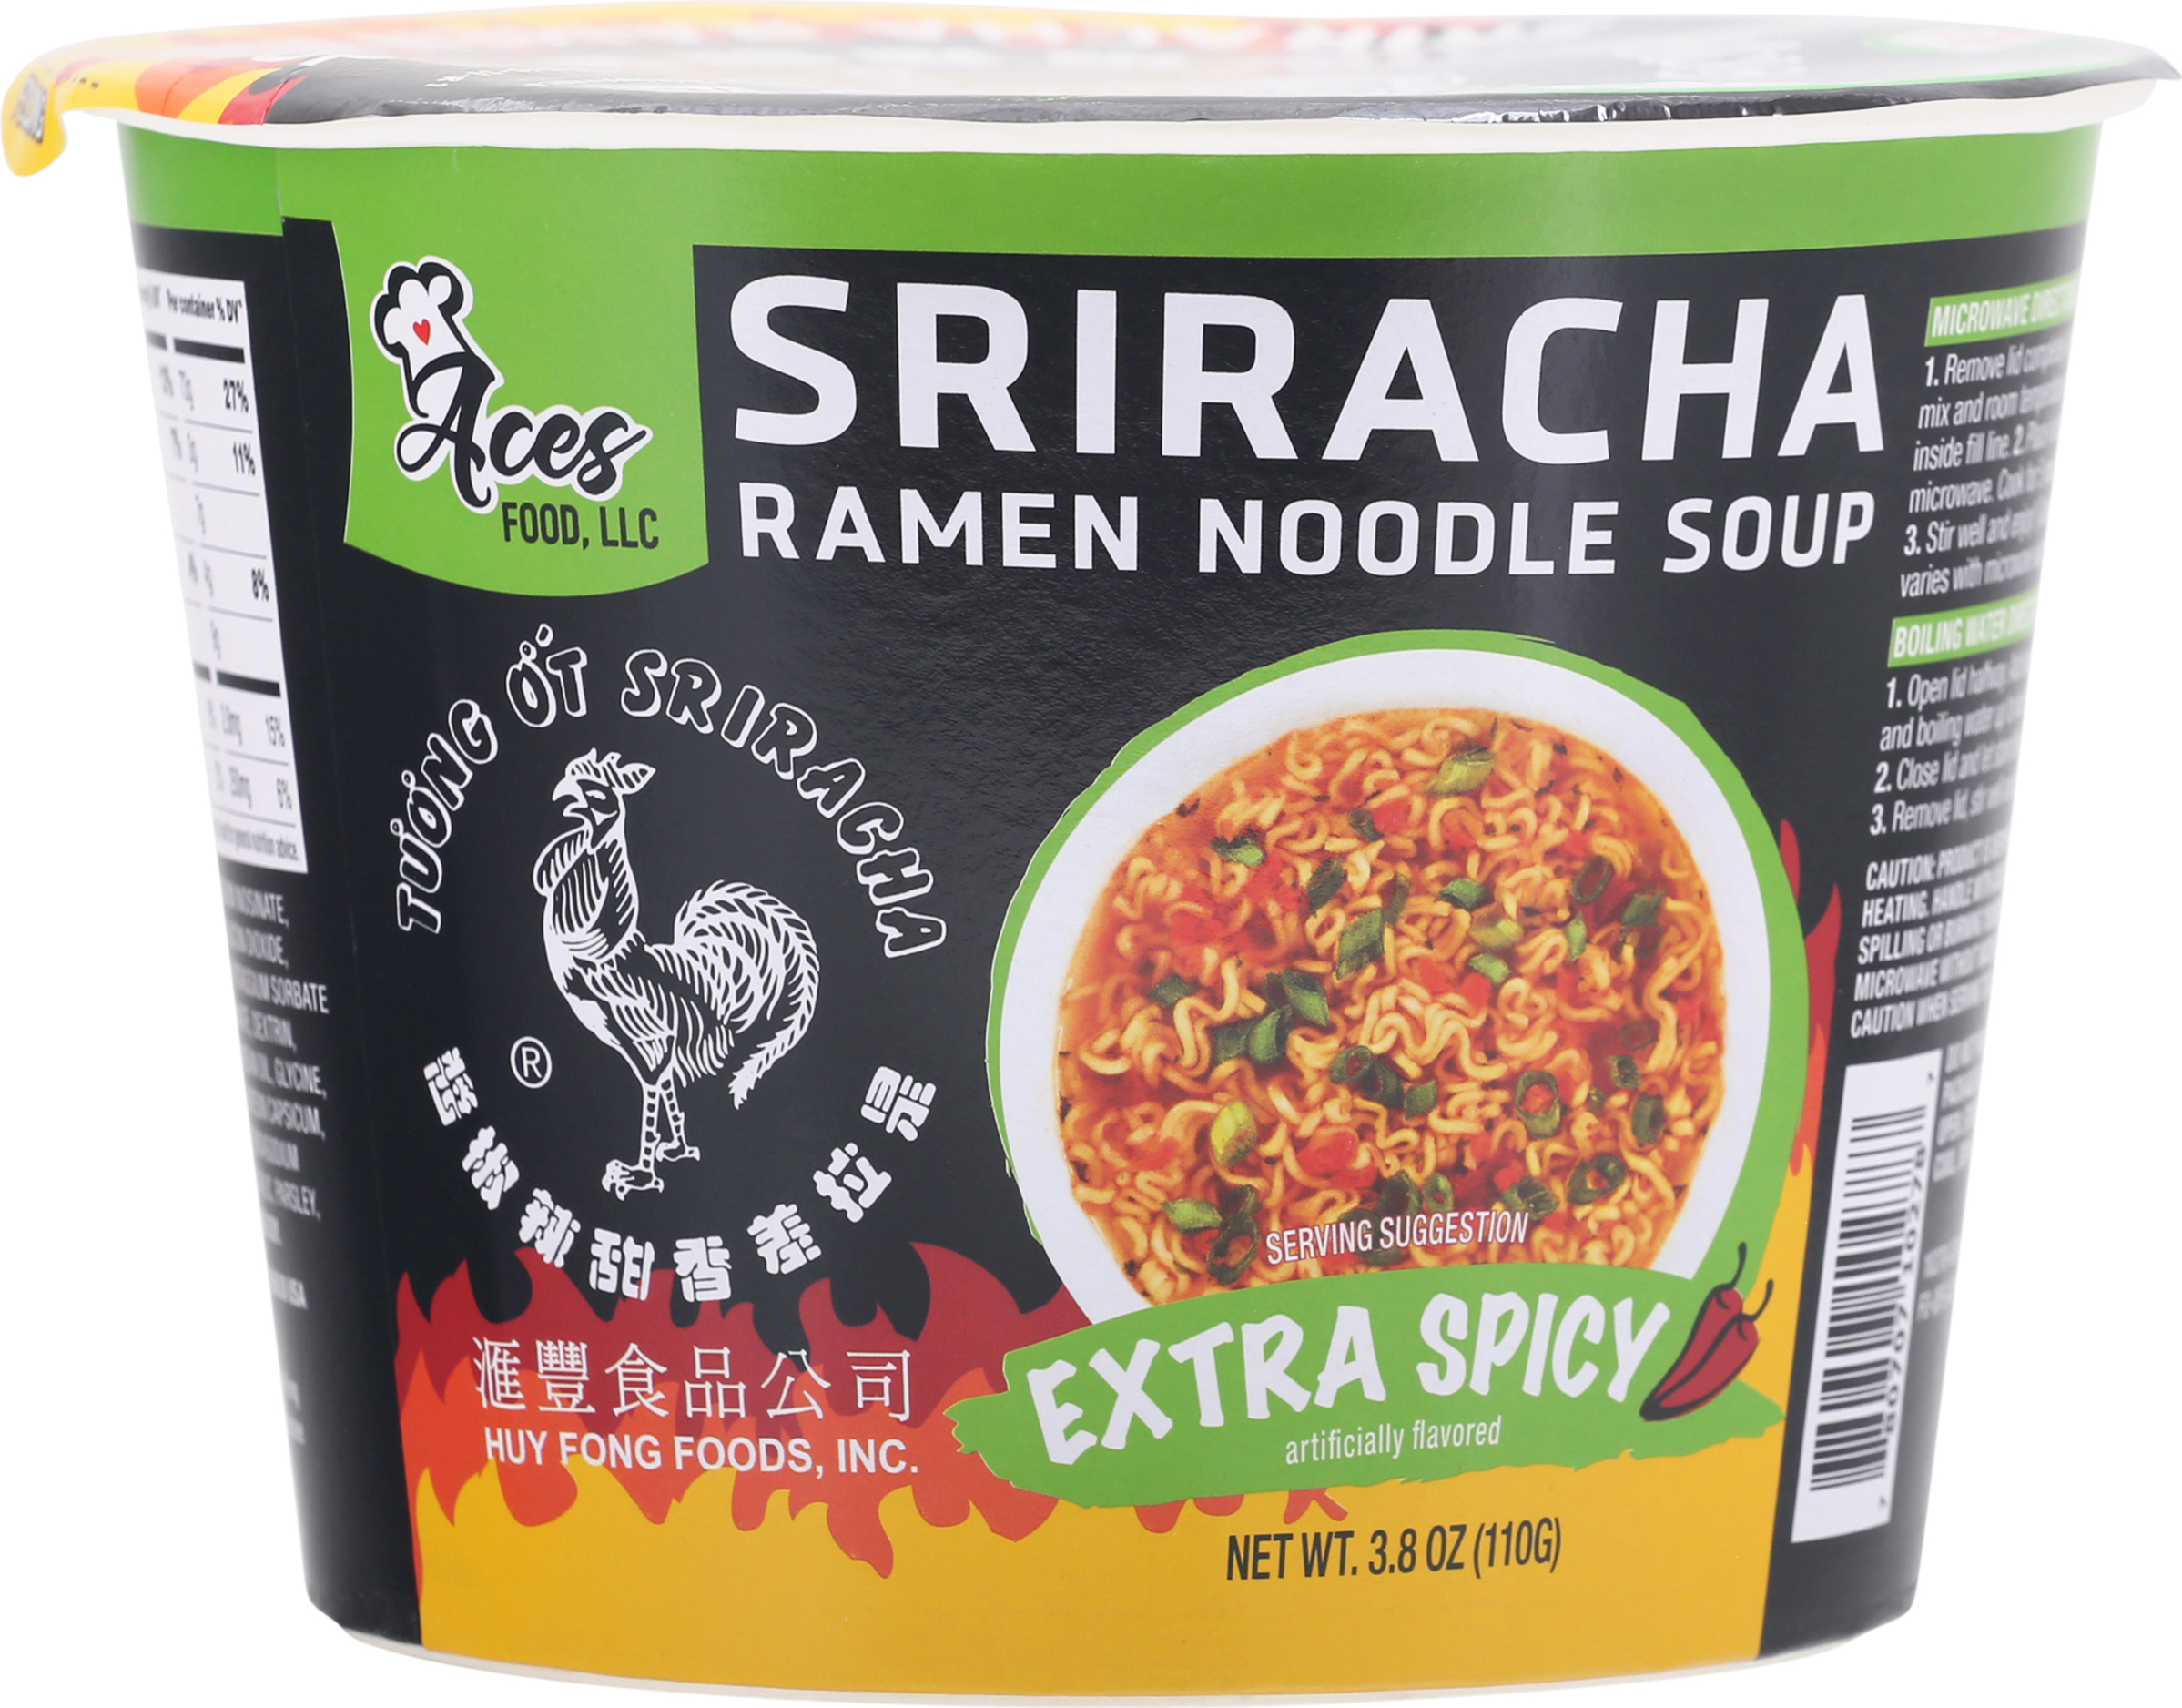 Aces Food, LLC Extra Spicy Sriracha Ramen Noodle Soup 3.8 oz